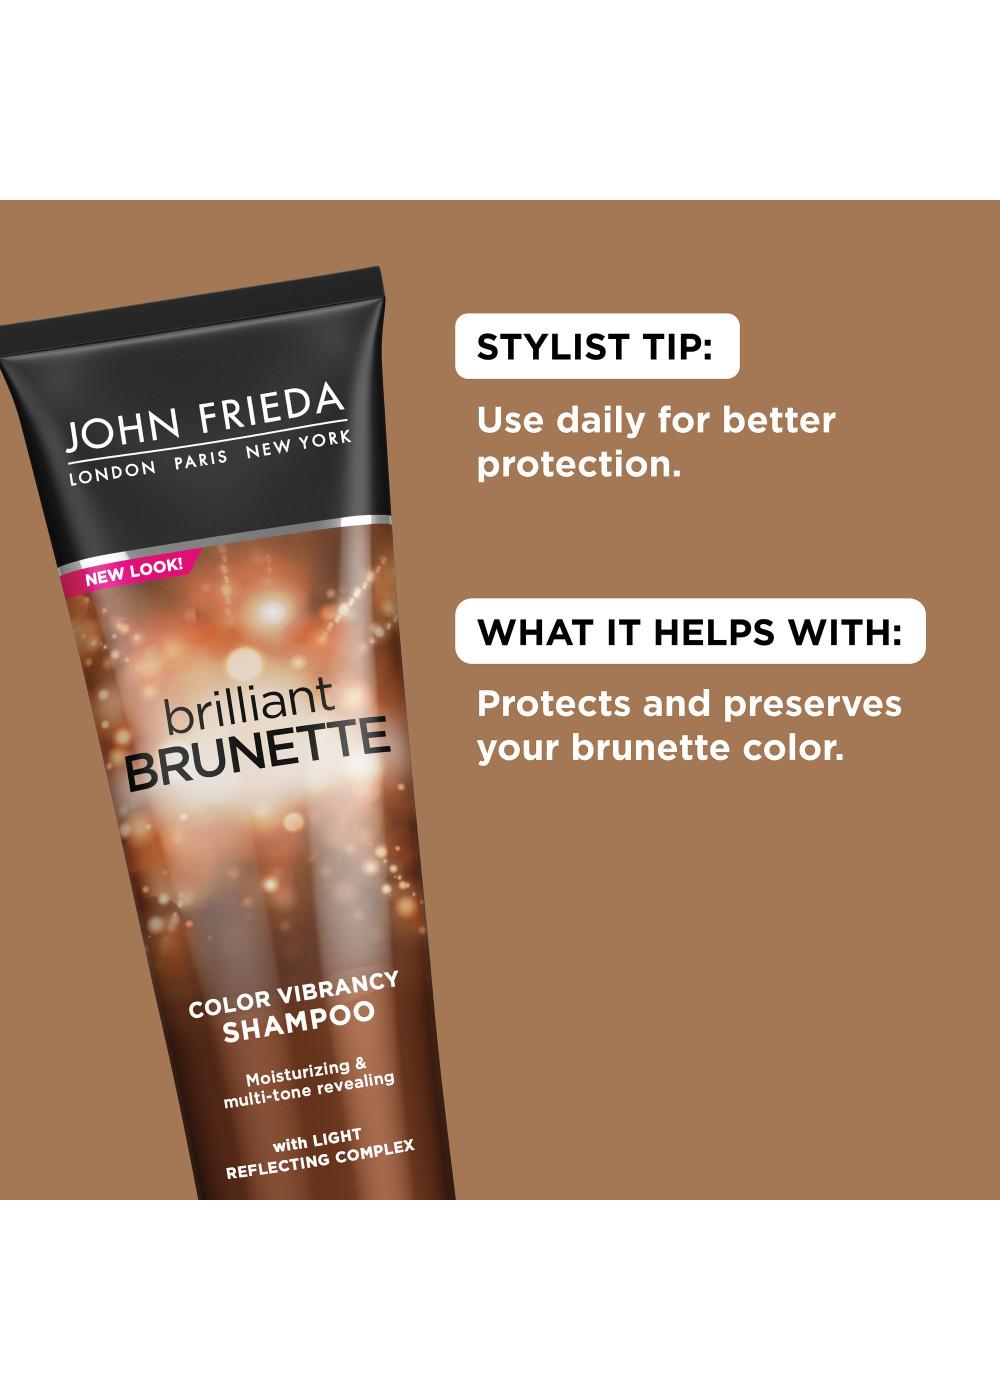 John Frieda Brilliant Brunette Color Vibrancy Shampoo; image 2 of 7